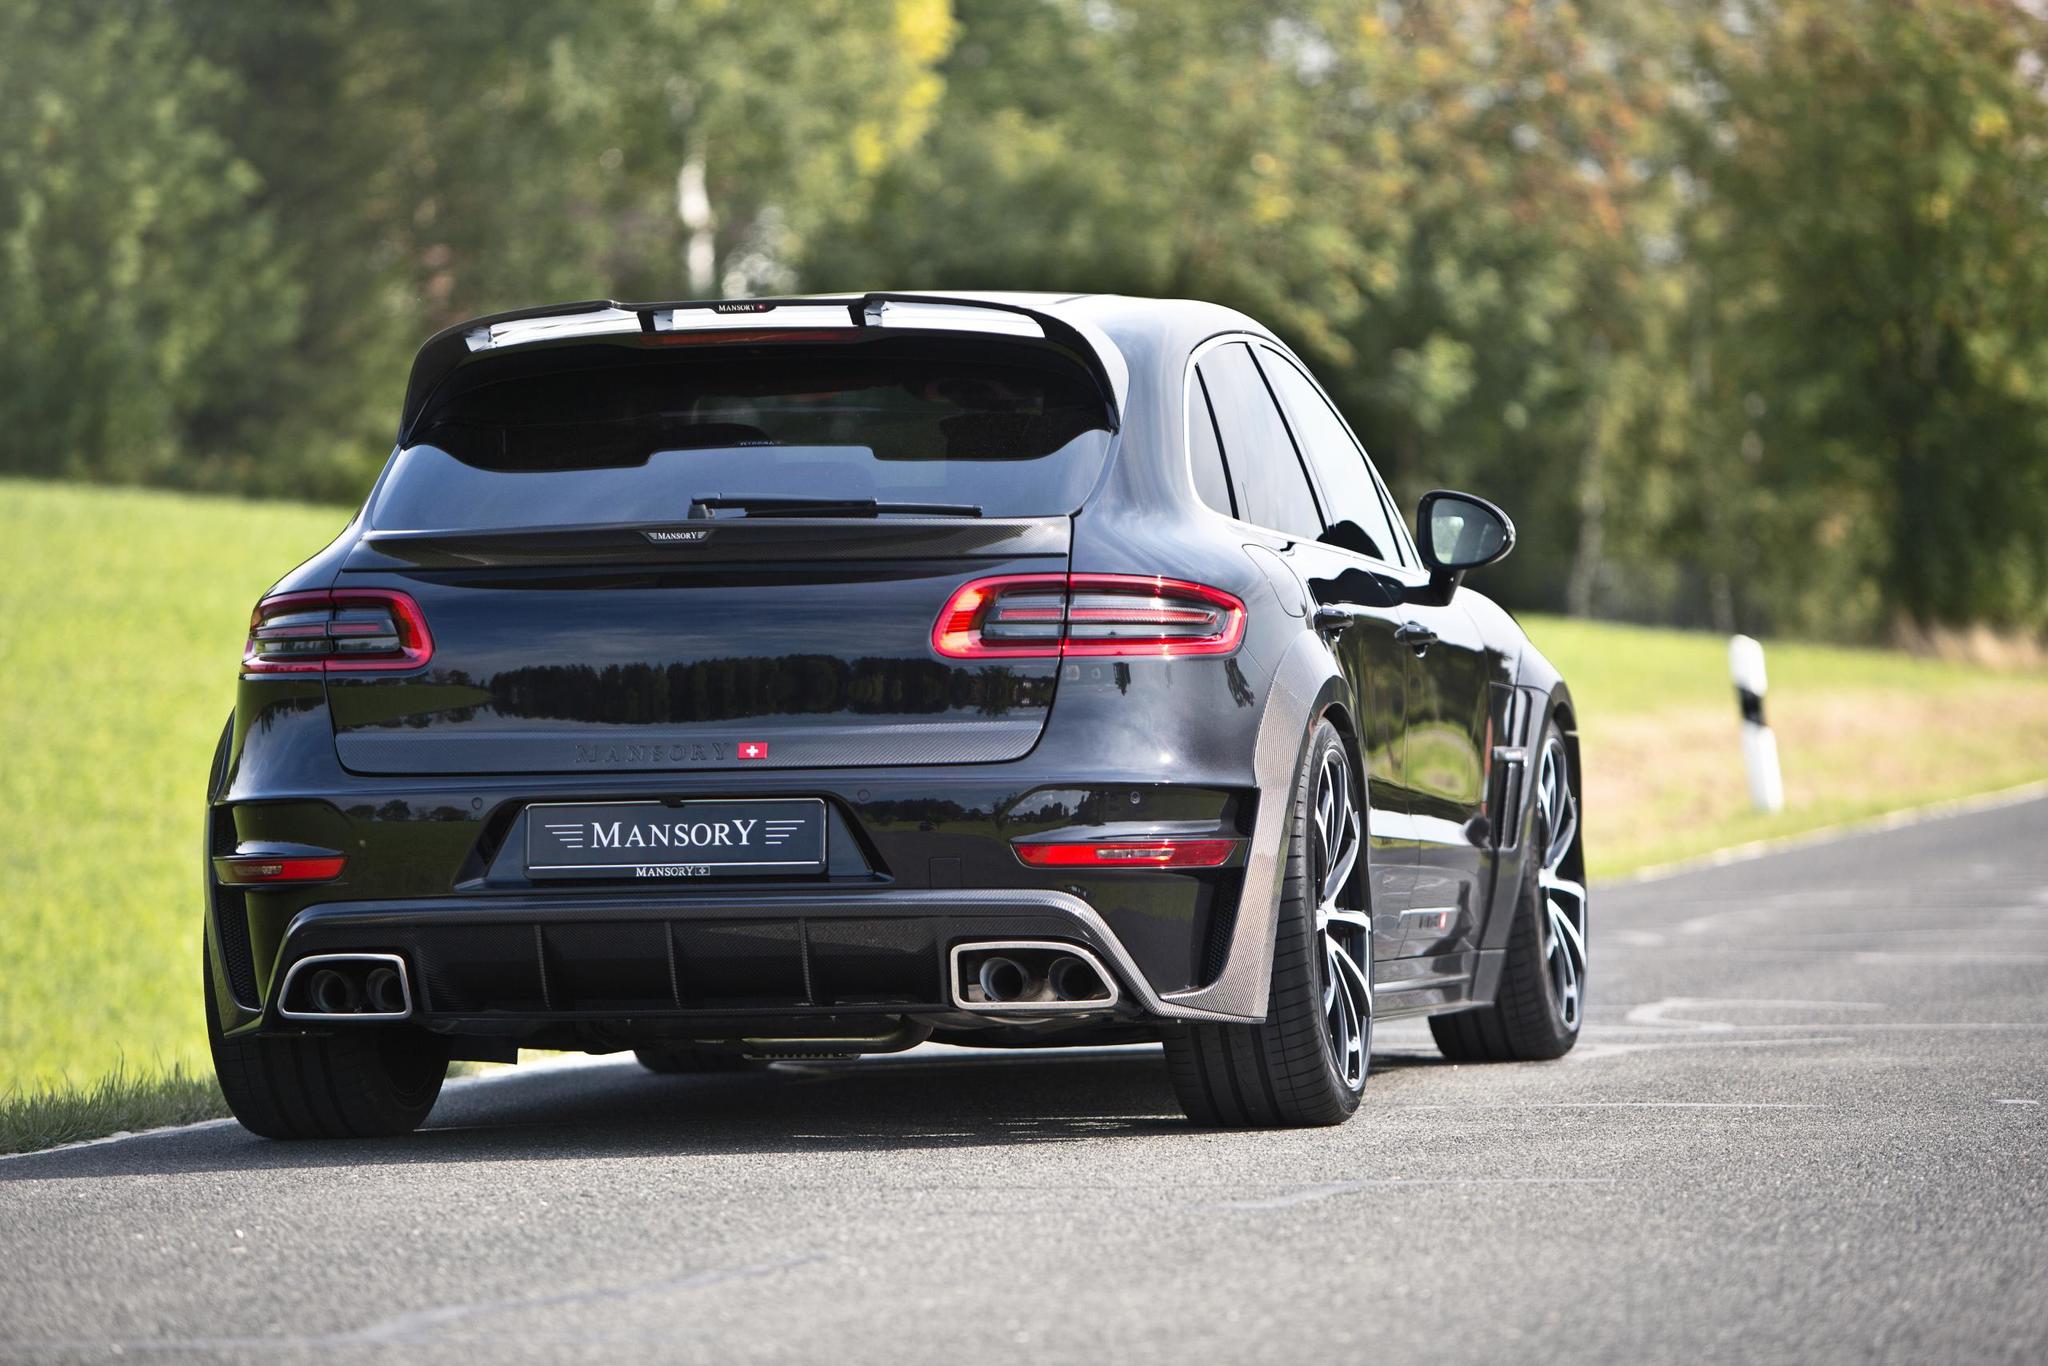 Mansory body kit for Porsche Macan carbon